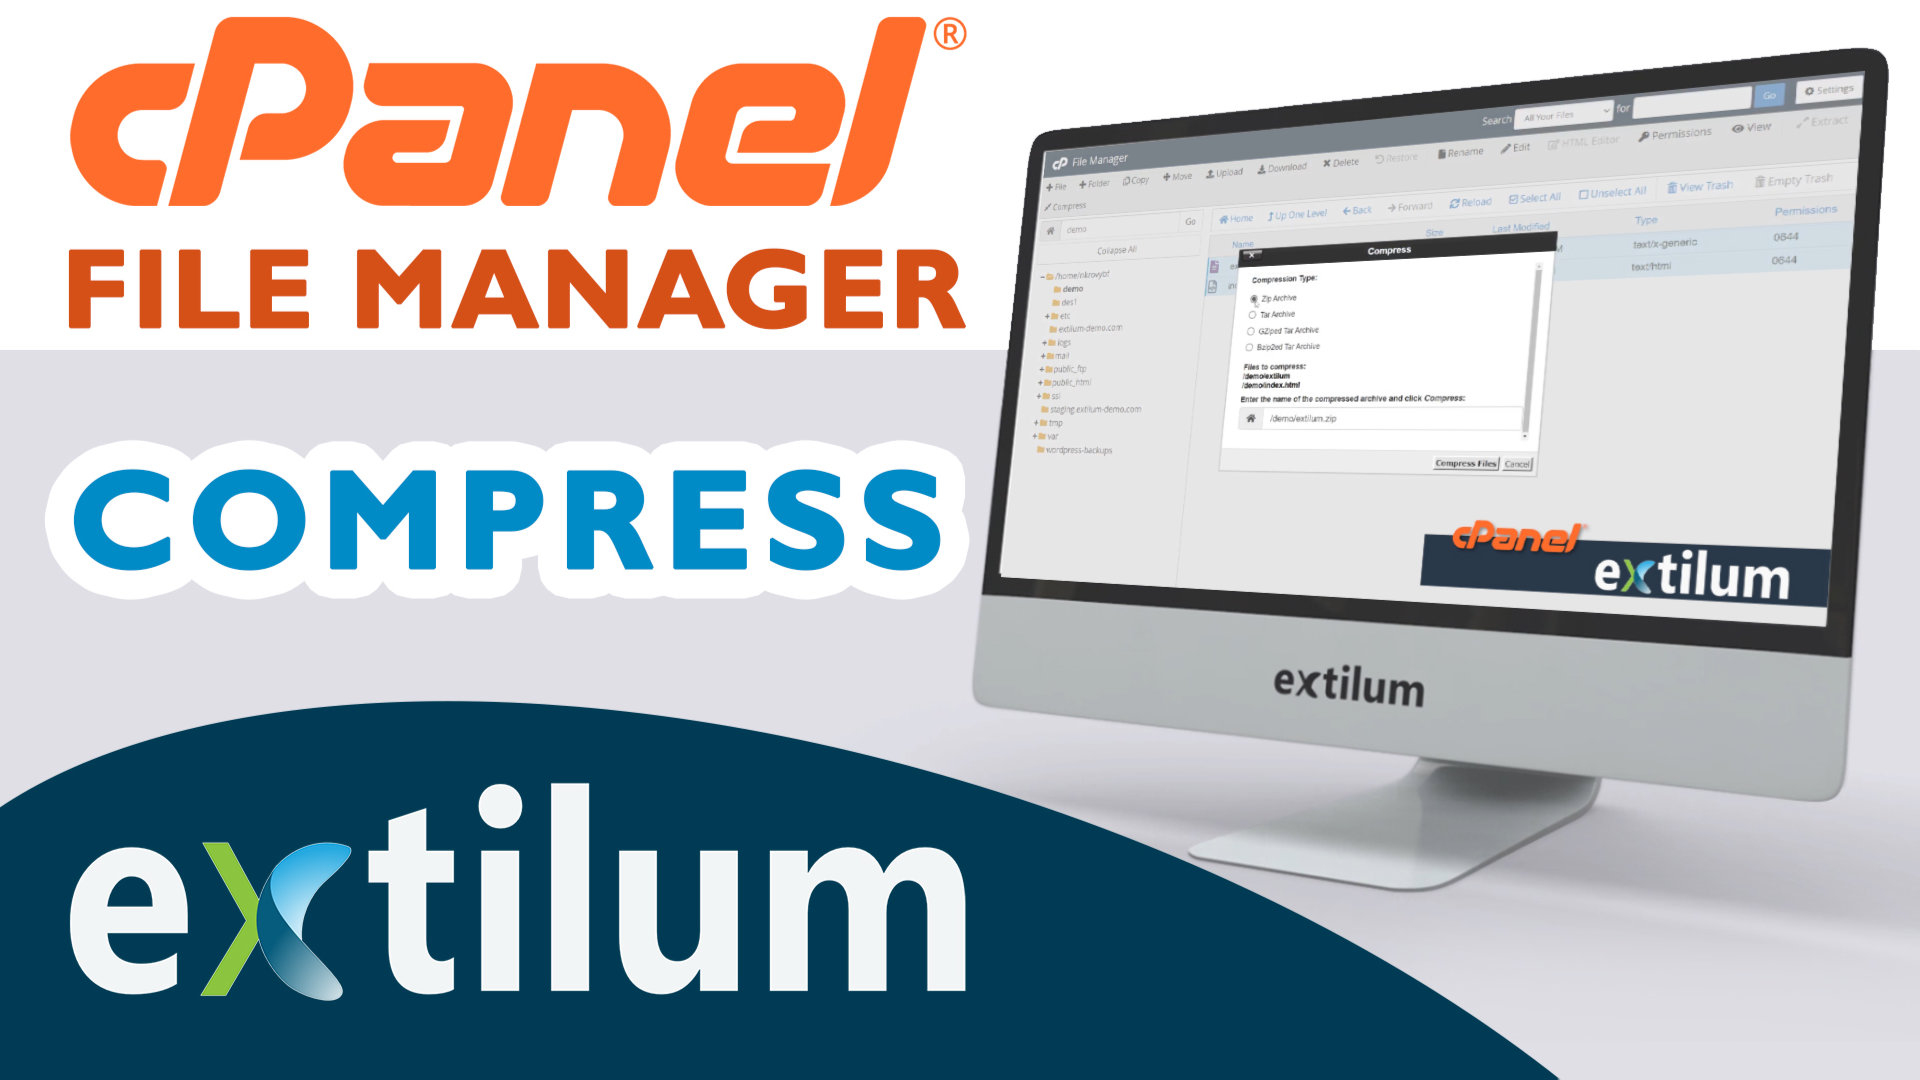 Extilum cpanel - file manager - compress